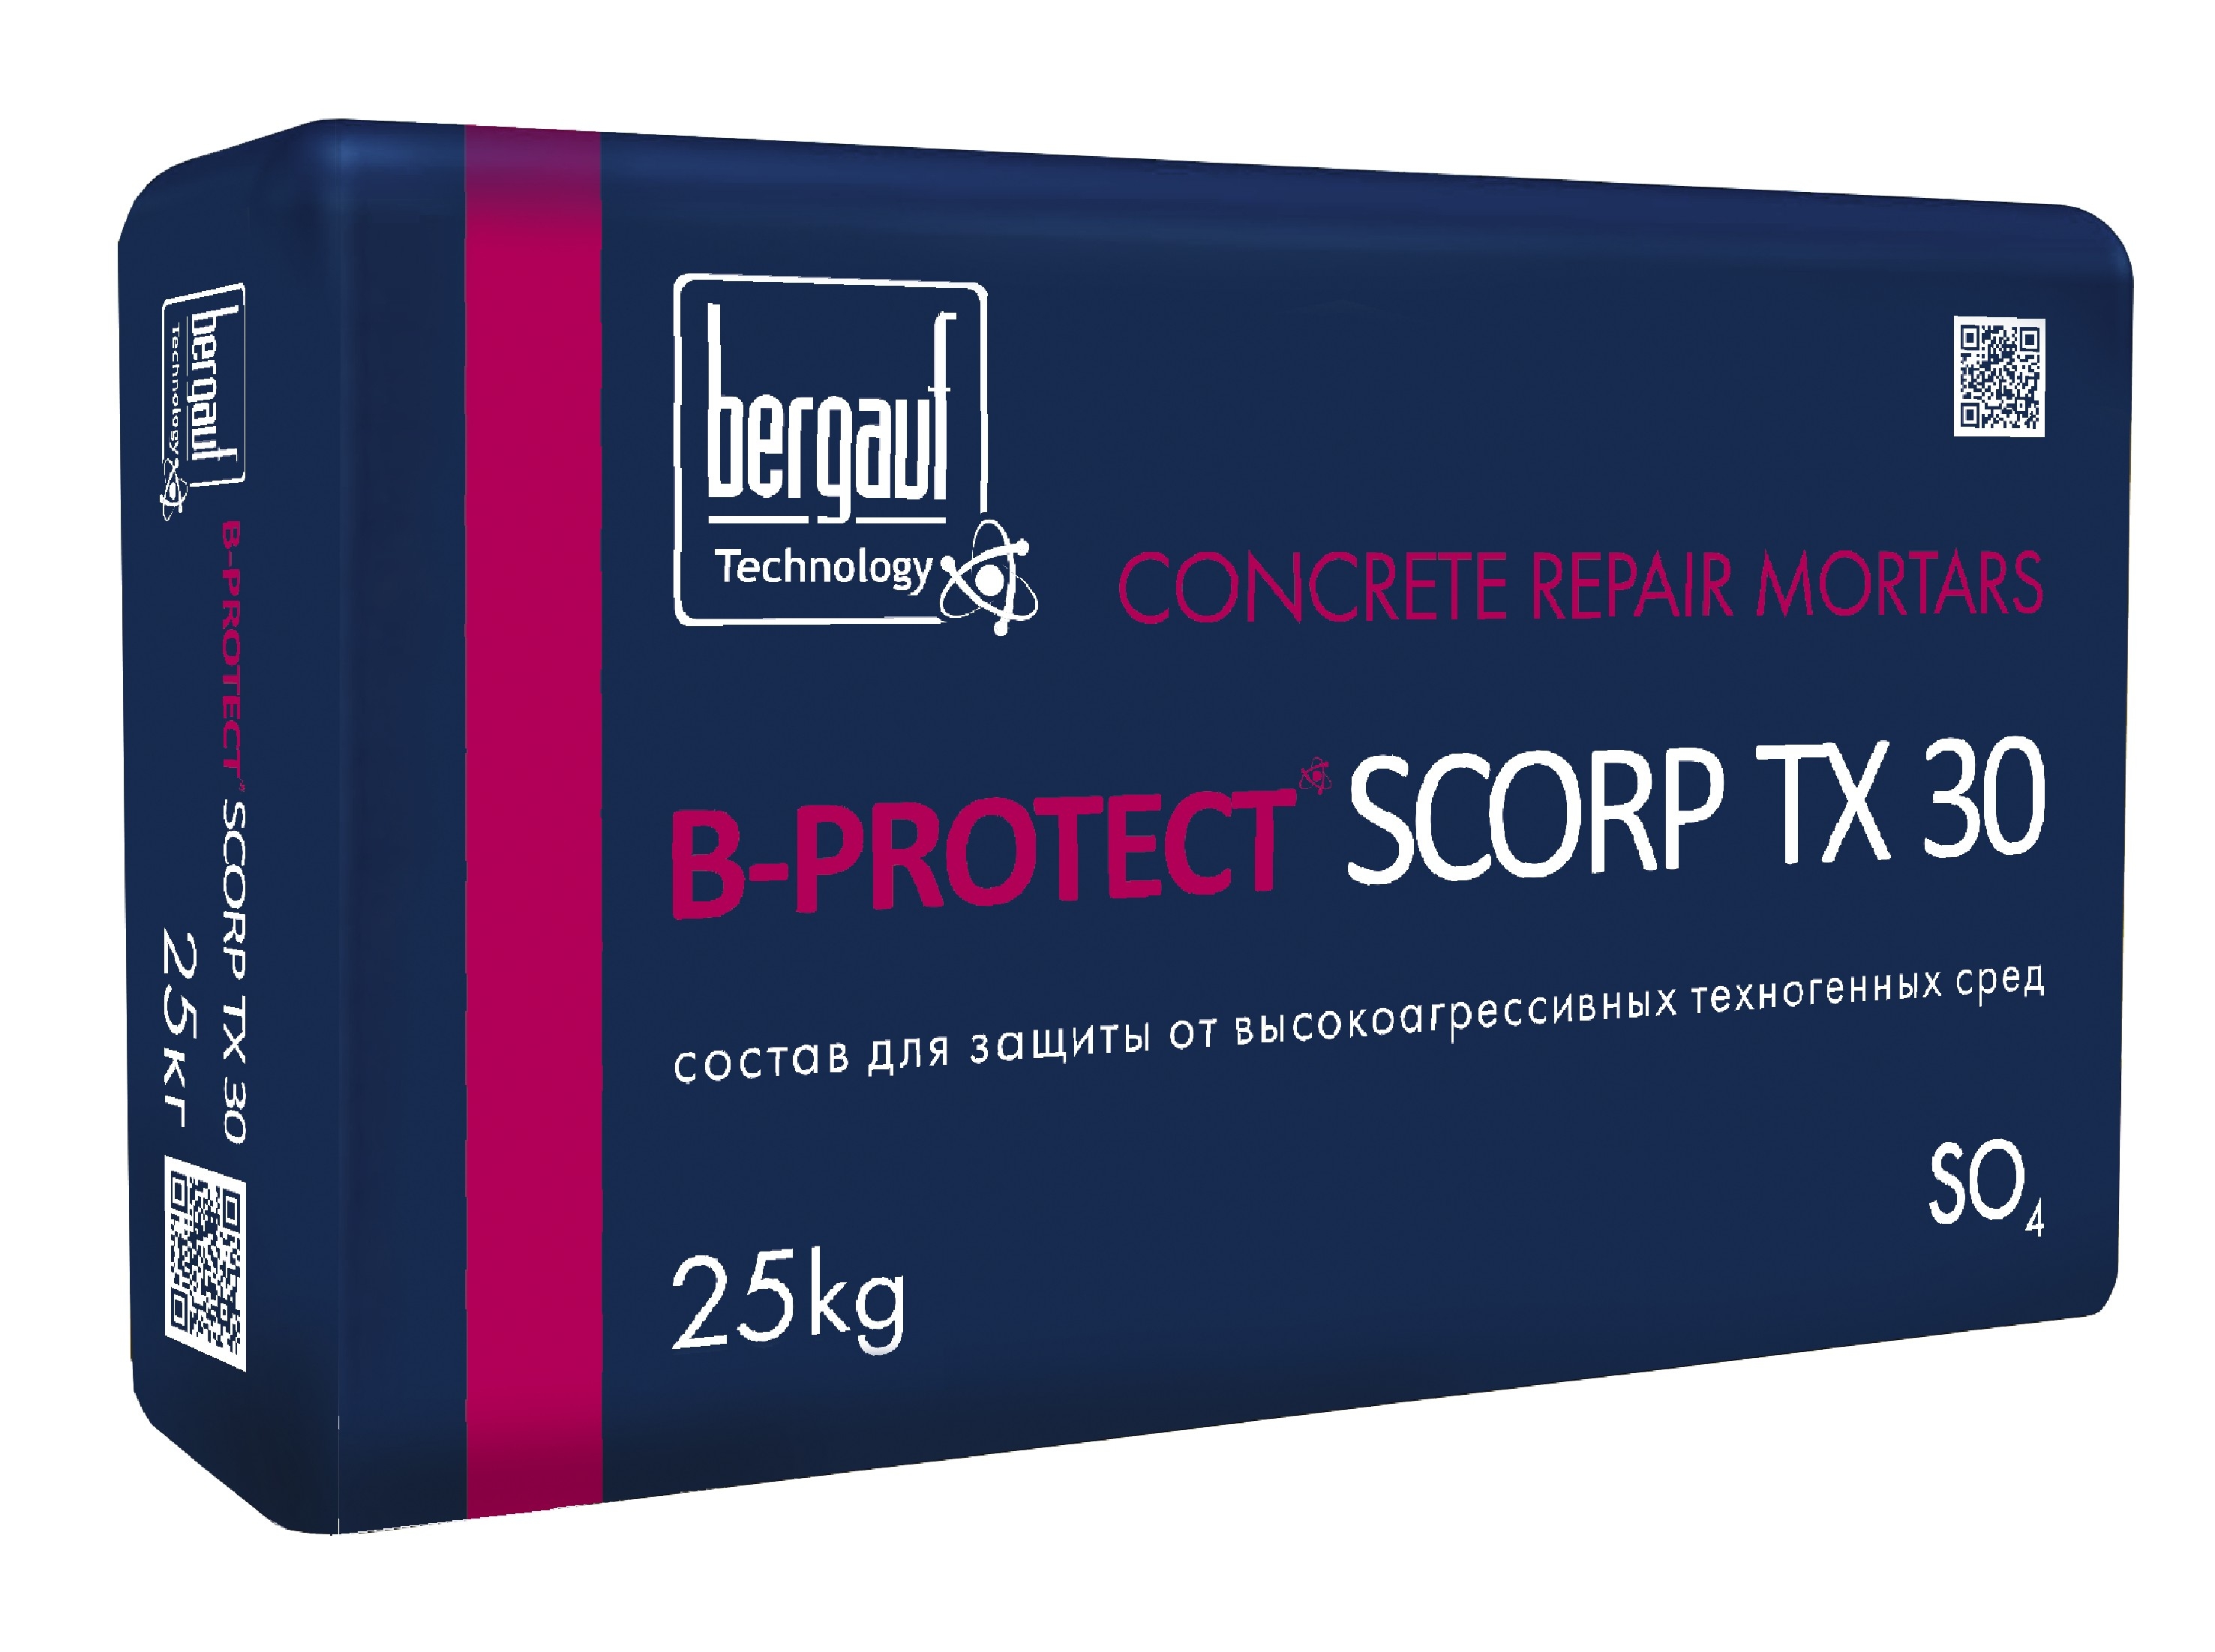 B-Protect SCORP TX 30